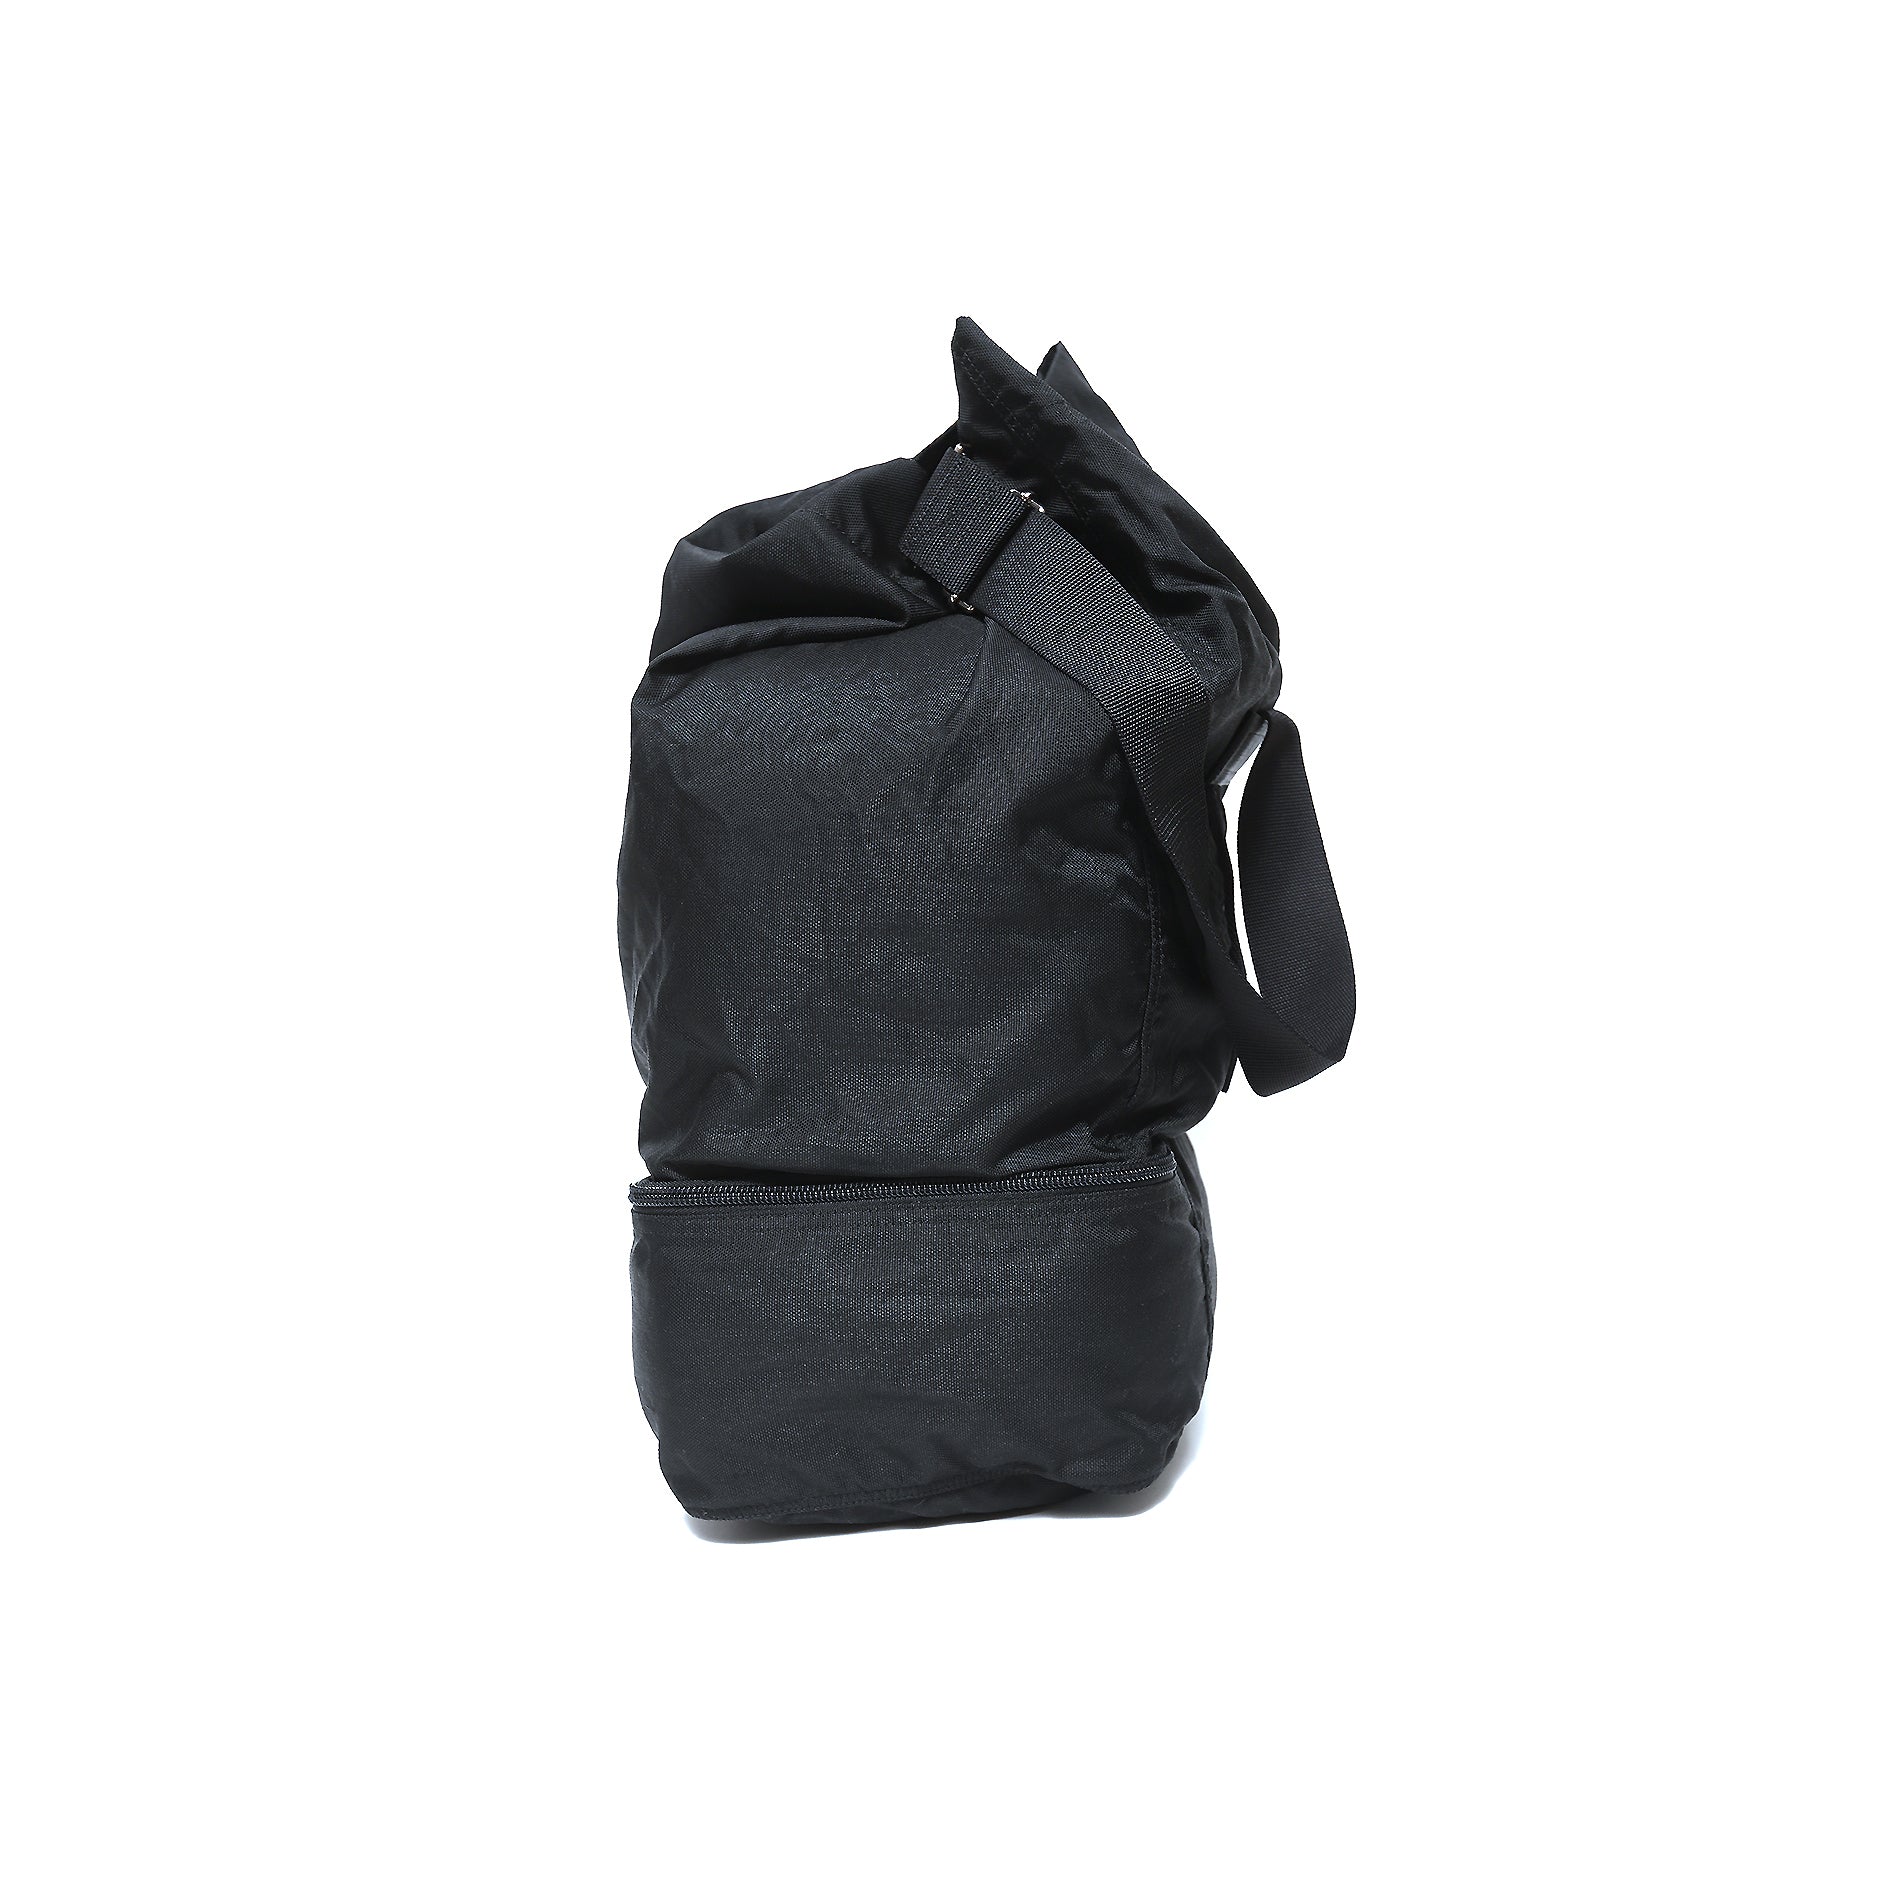 Helmut Lang s Black Military Backpack   Ākaibu Store